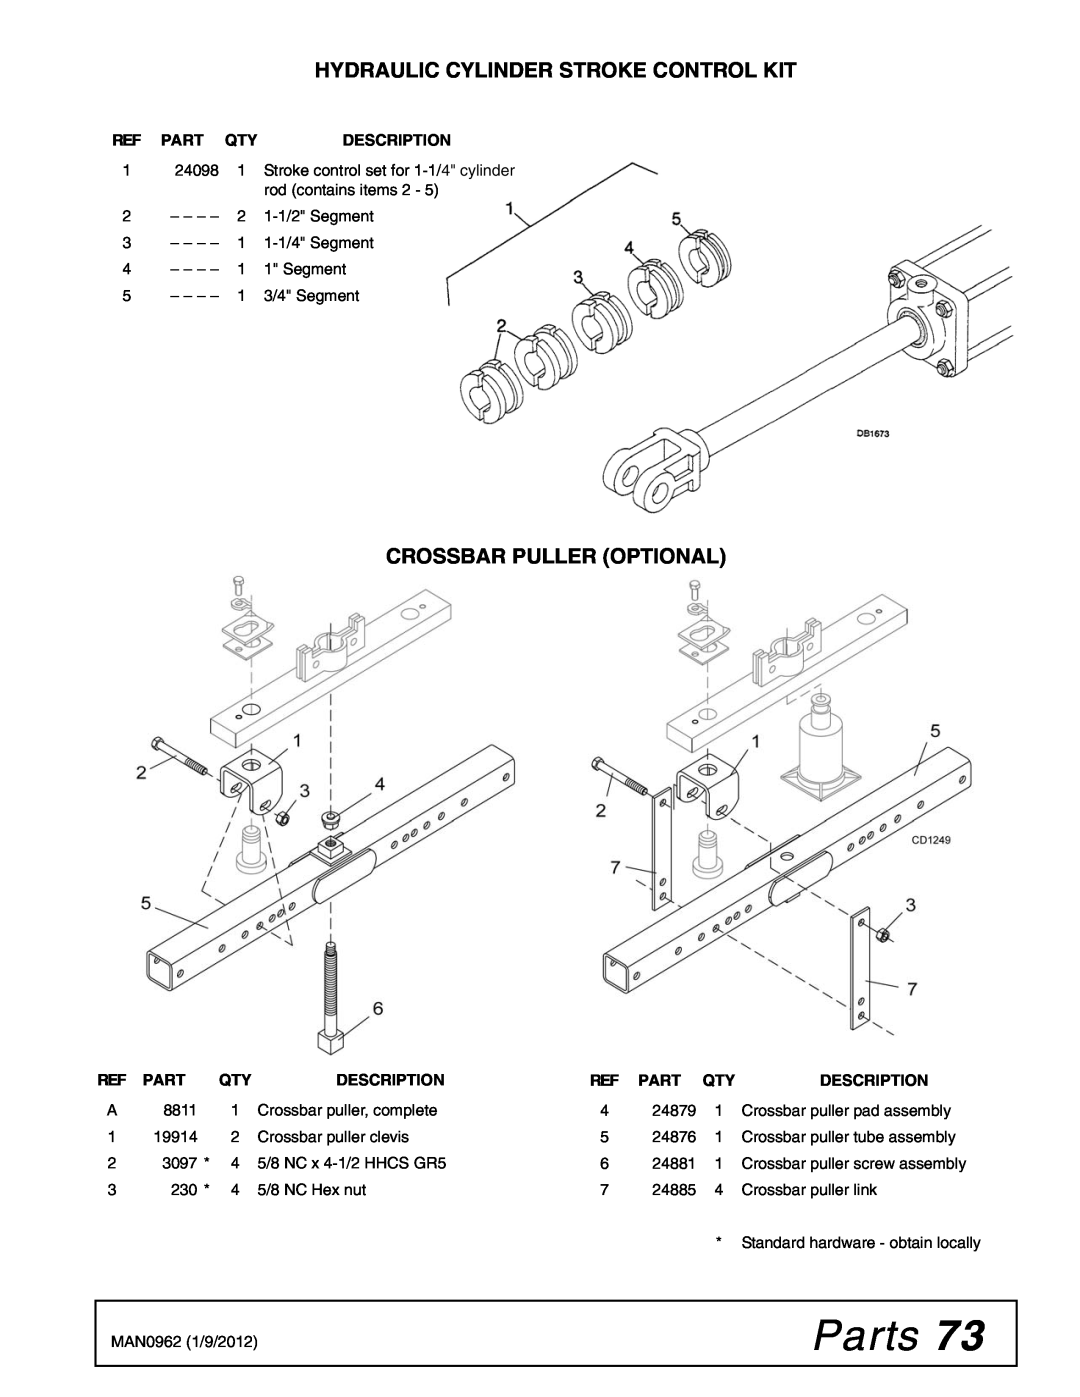 Woods Equipment BW126XQ, BW180XQ manual Parts, Crossbar Puller Optional, Hydraulic Cylinder Stroke Control Kit, Description 